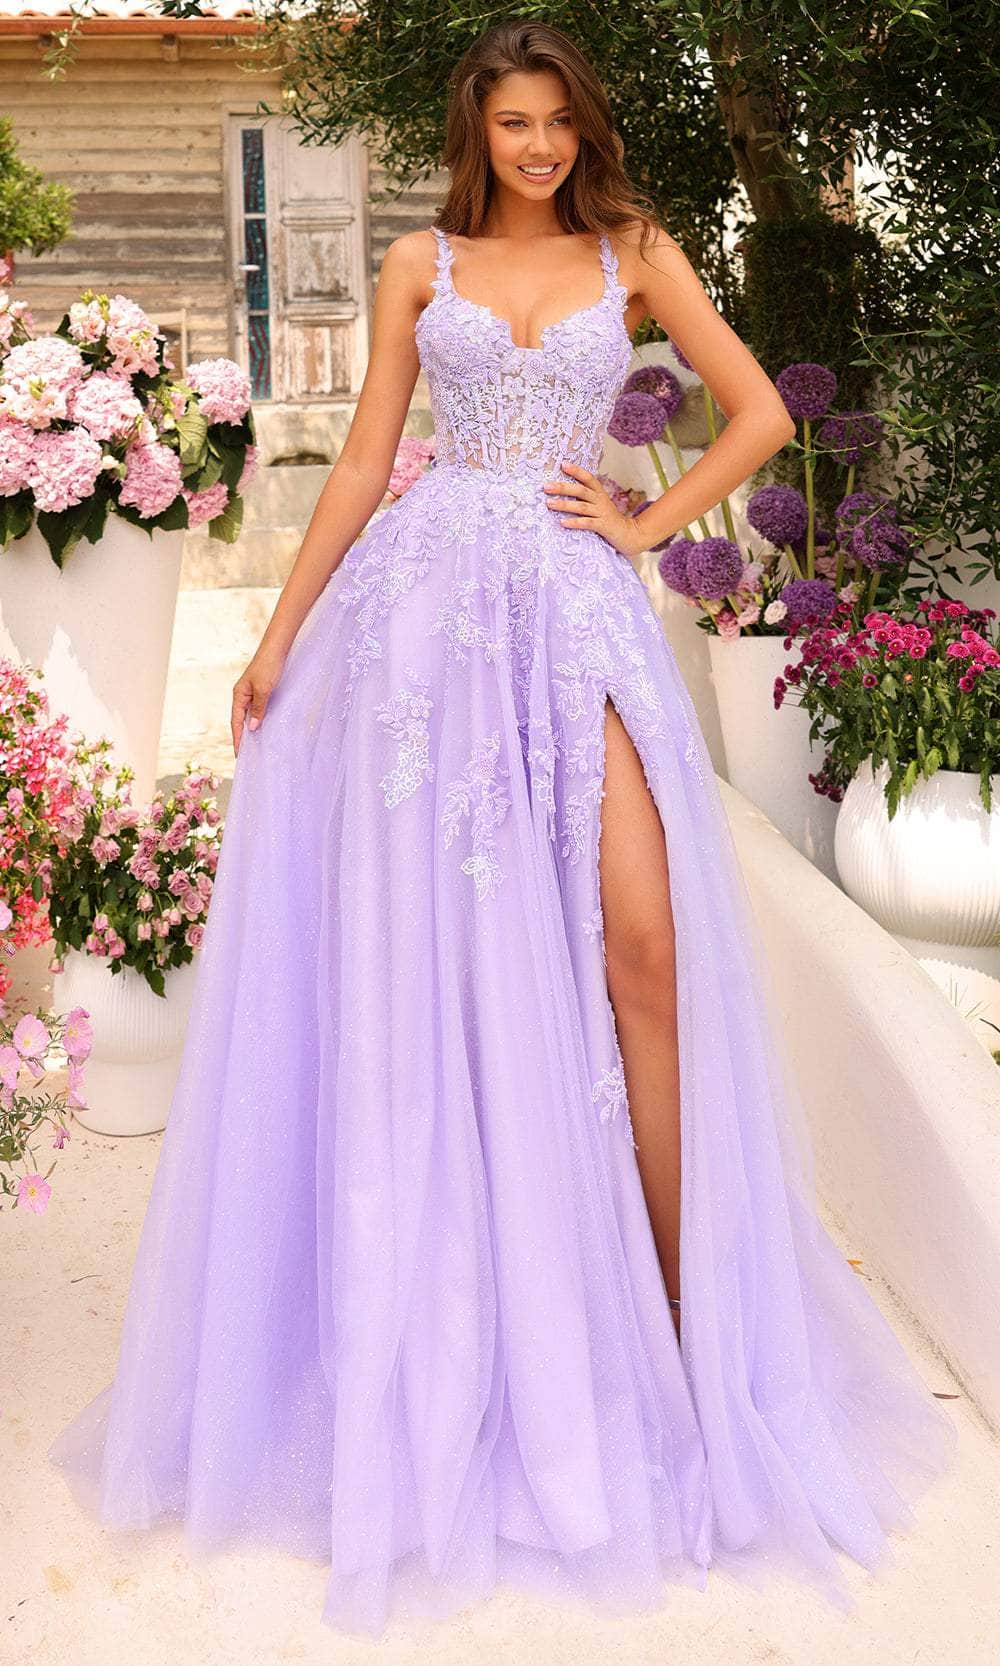 Amarra 88849 - Lace Ornate Corset Prom Dress